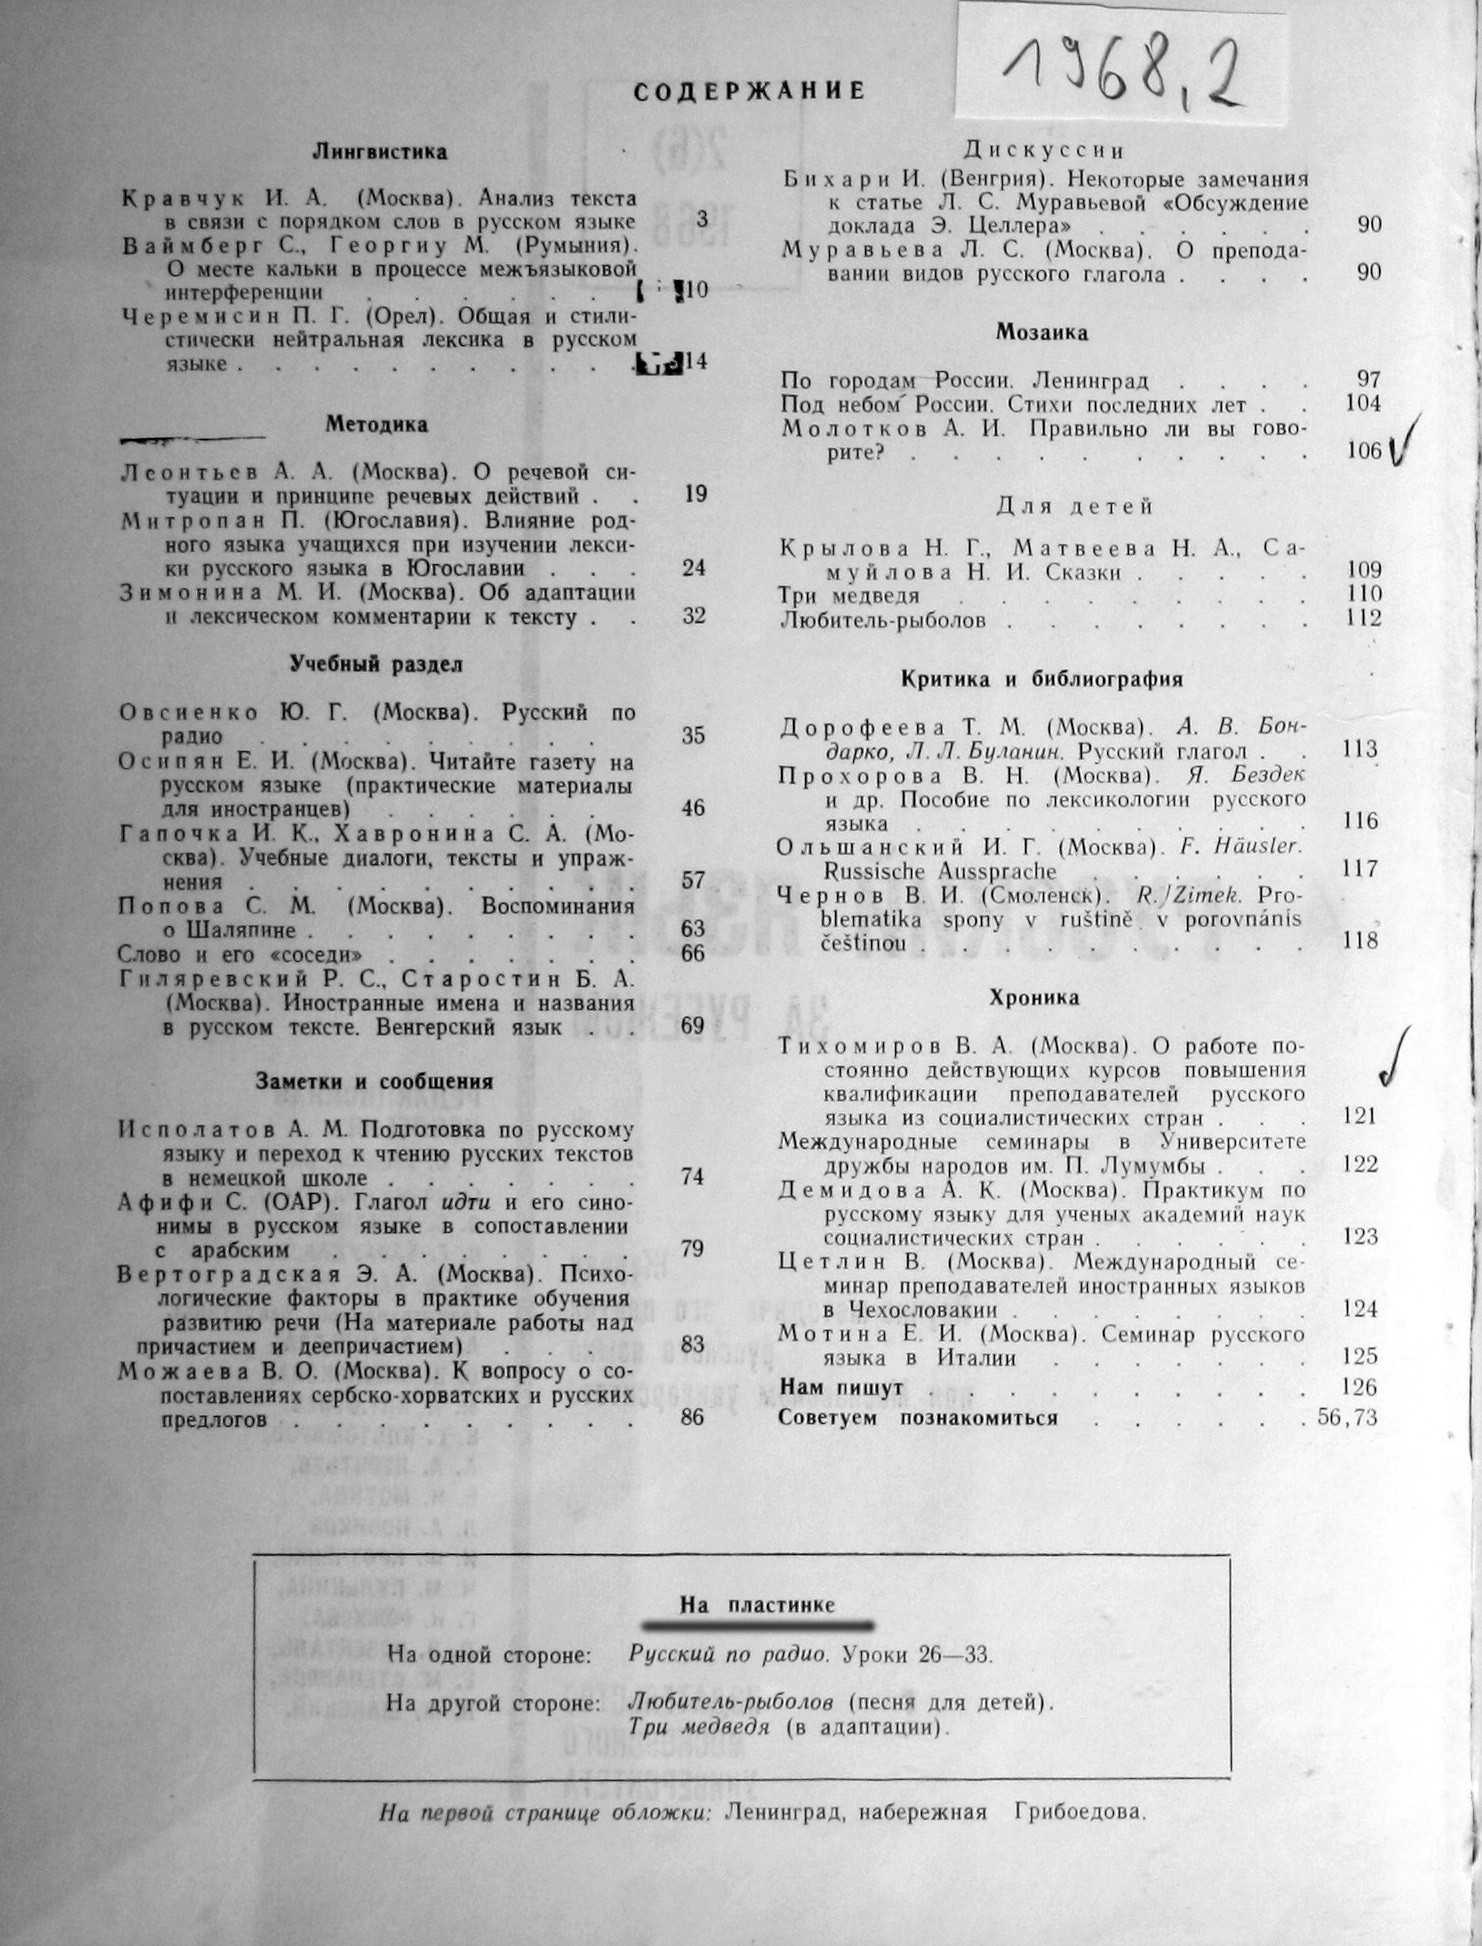 "РУССКИЙ ЯЗЫК ЗА РУБЕЖОМ", № 2 - 1968